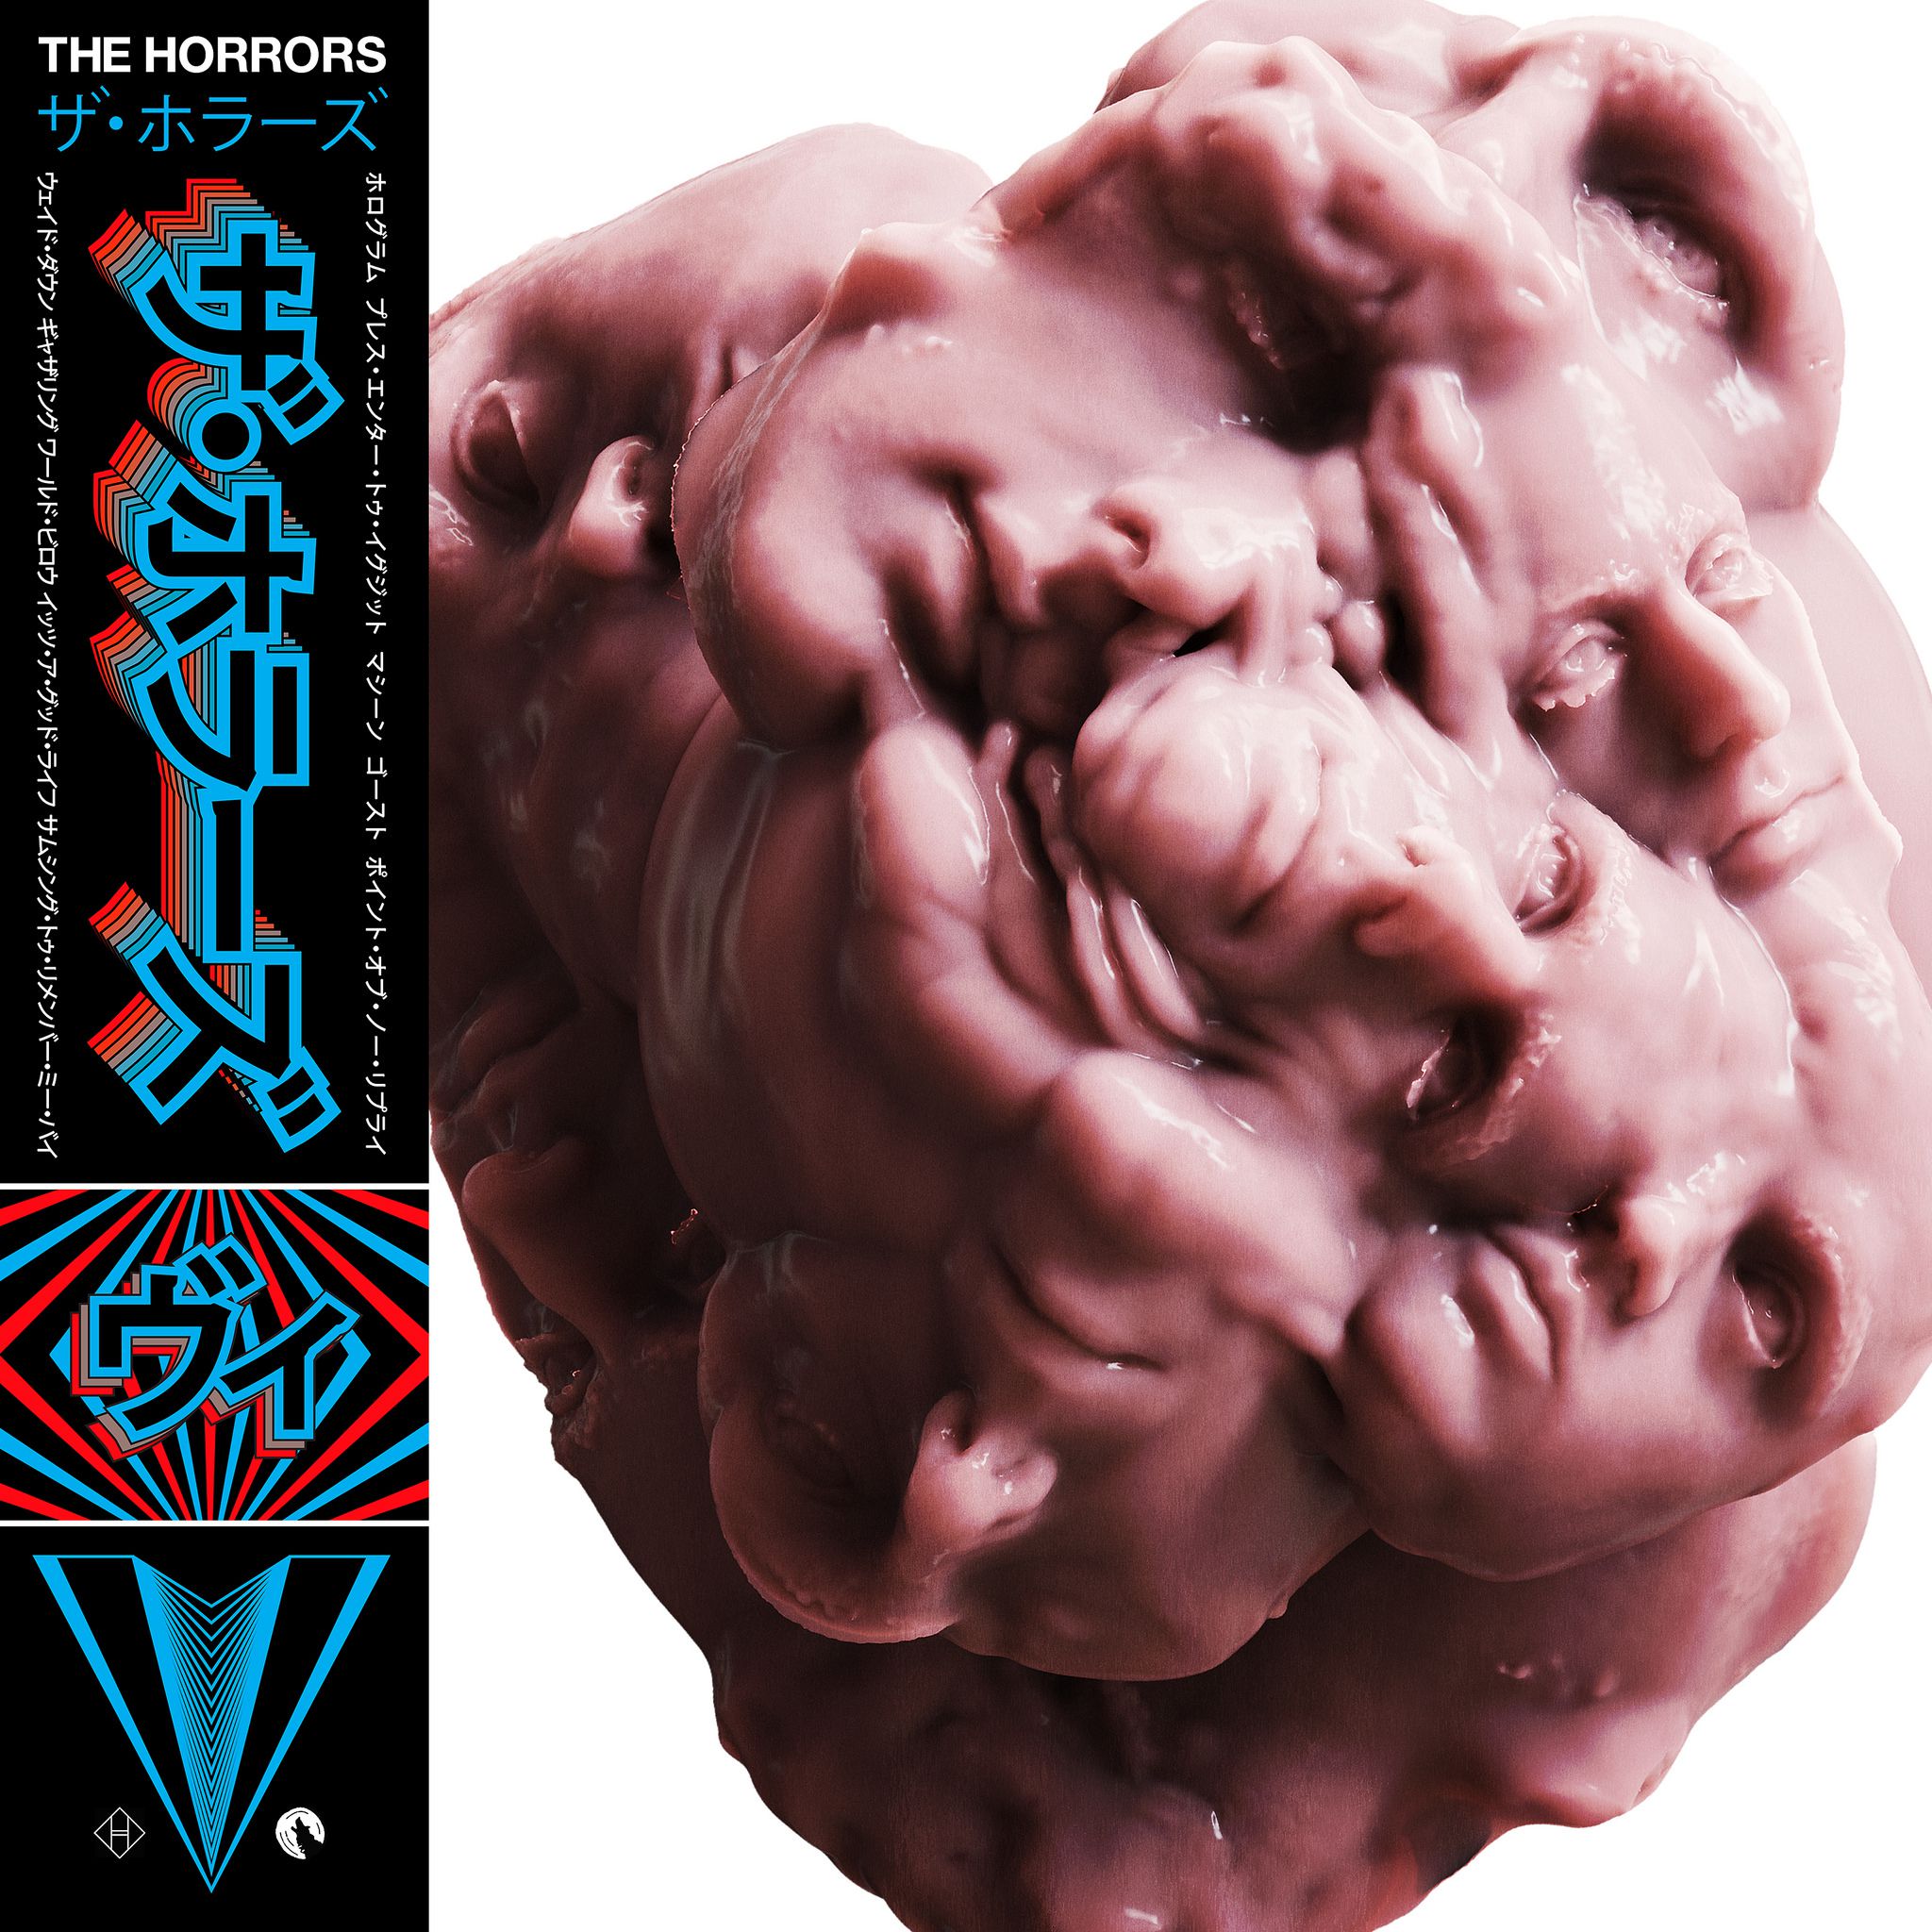 34778128663 13fe2383ba k The Horrors release their fifth album, V: Stream/download